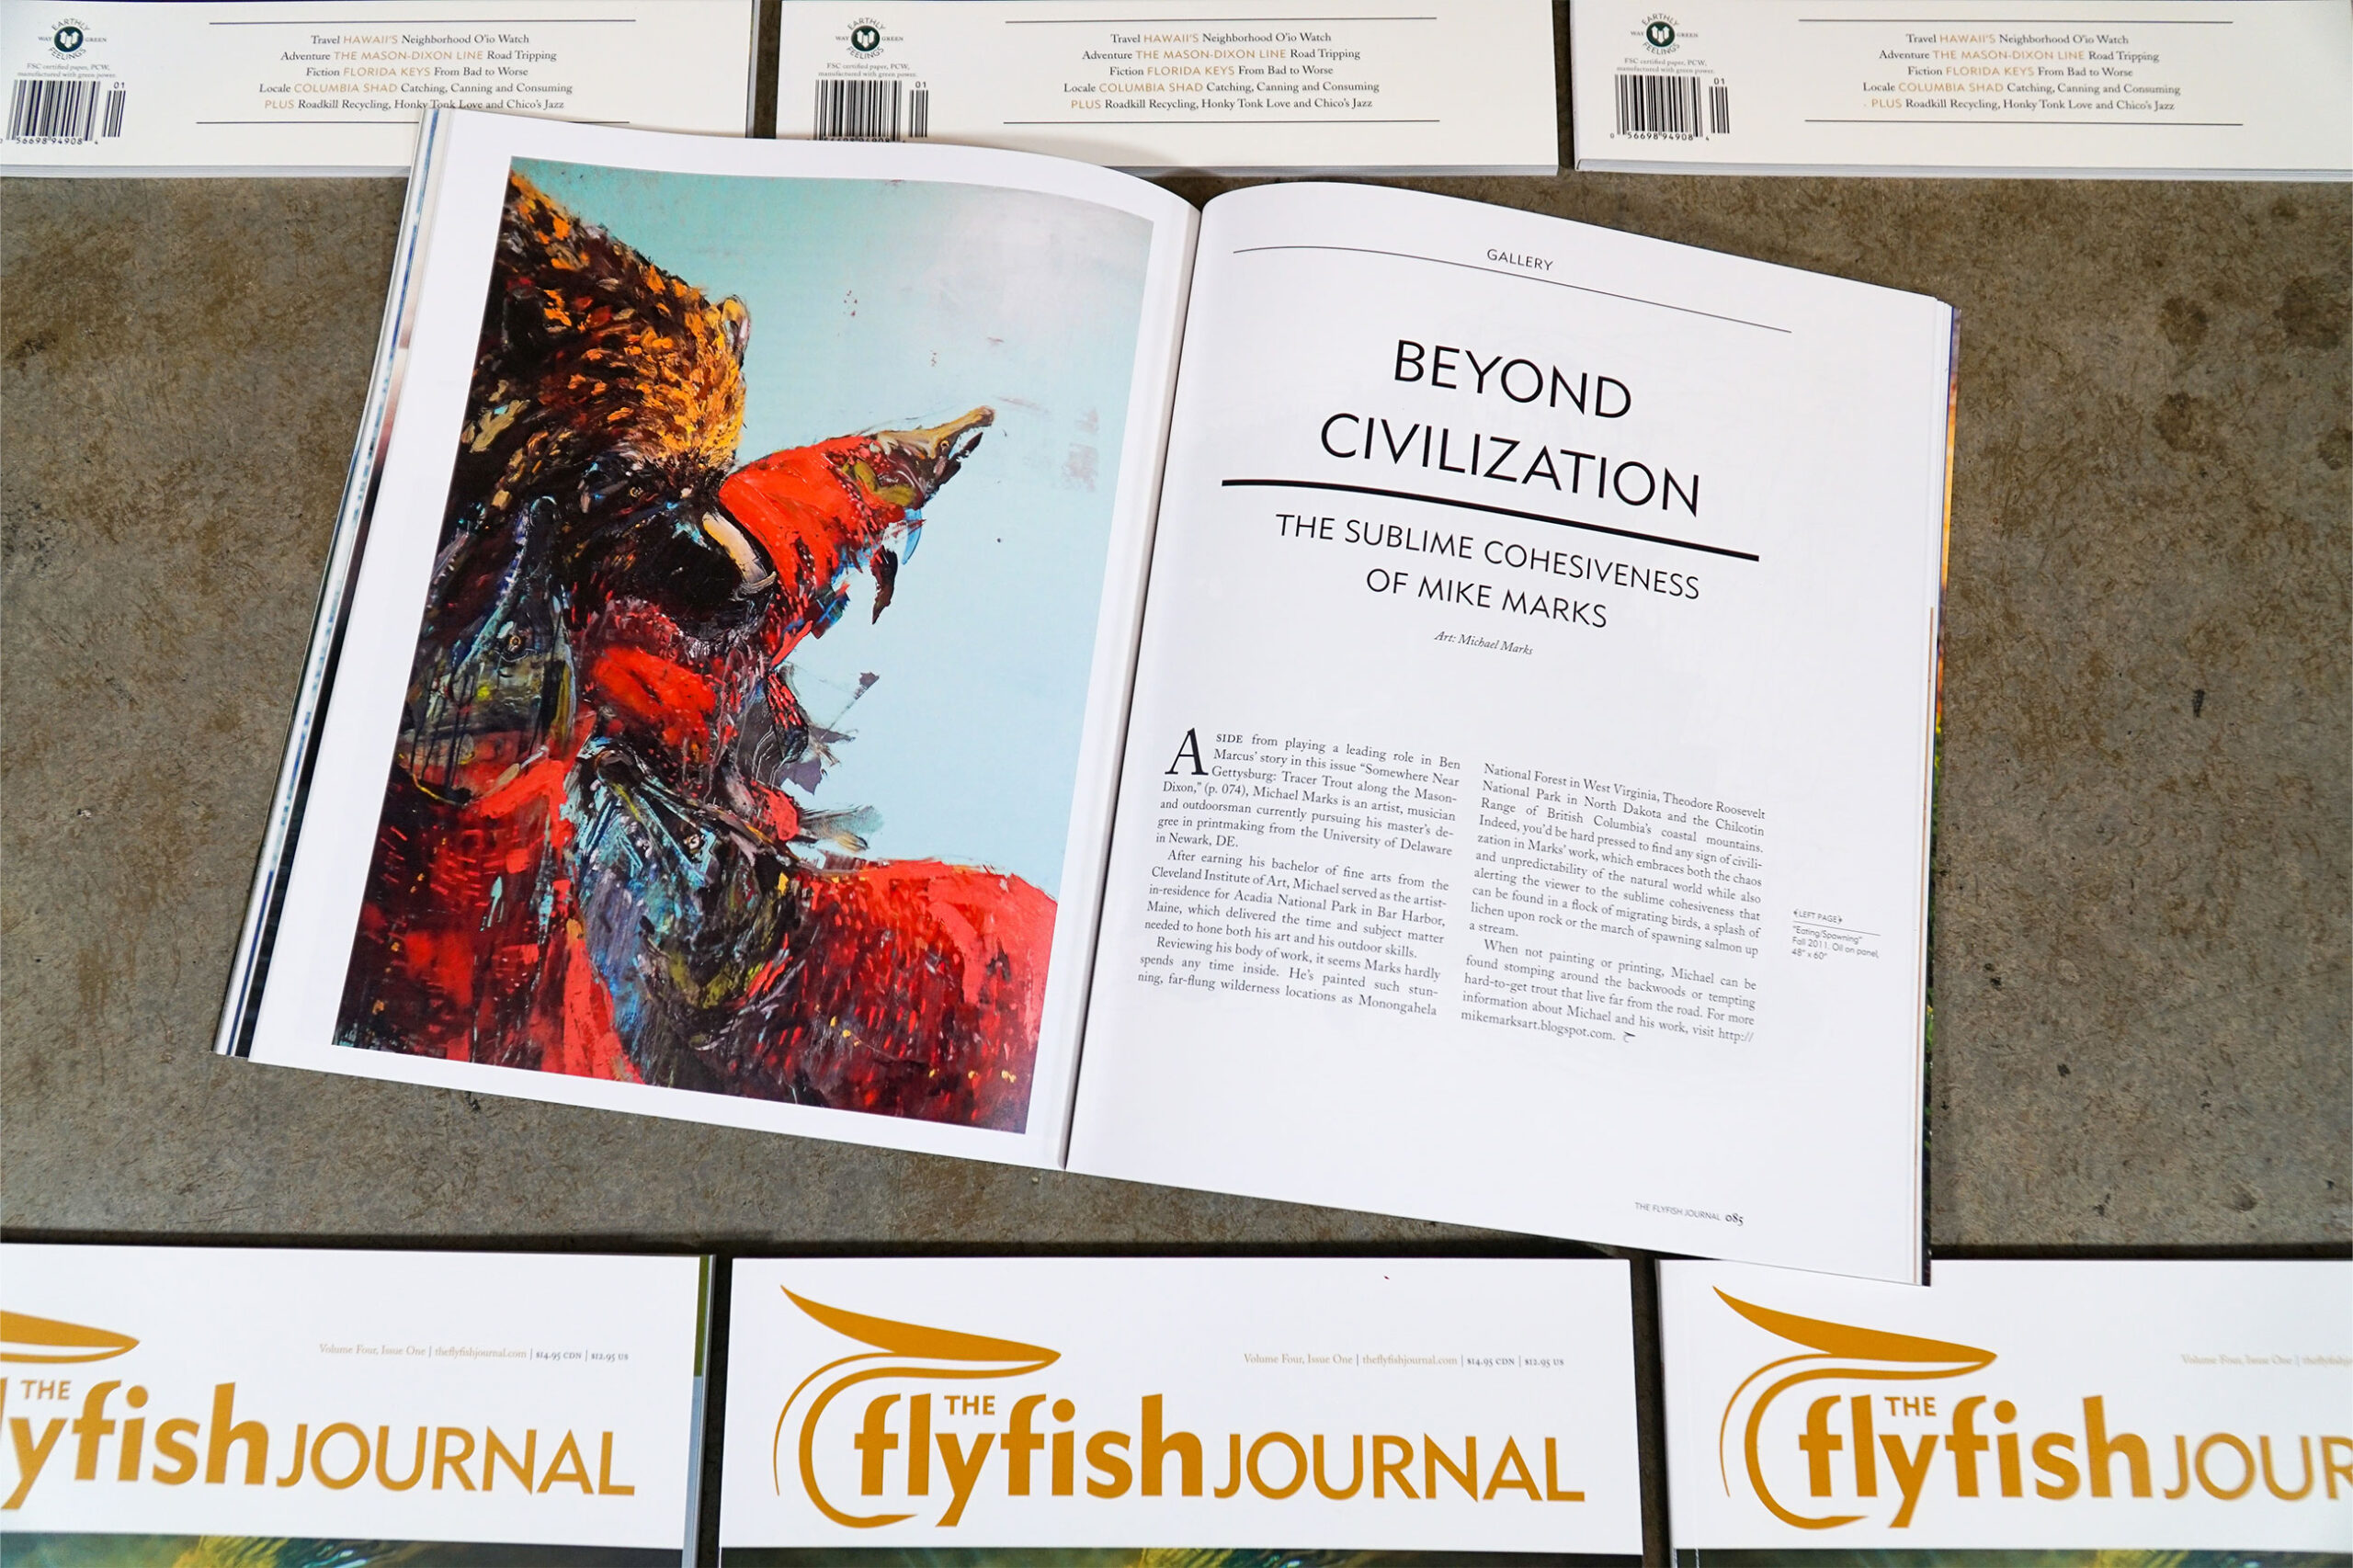 The Flyfish Journal Volume 4 Issue 1 Feature Beyond Civilization